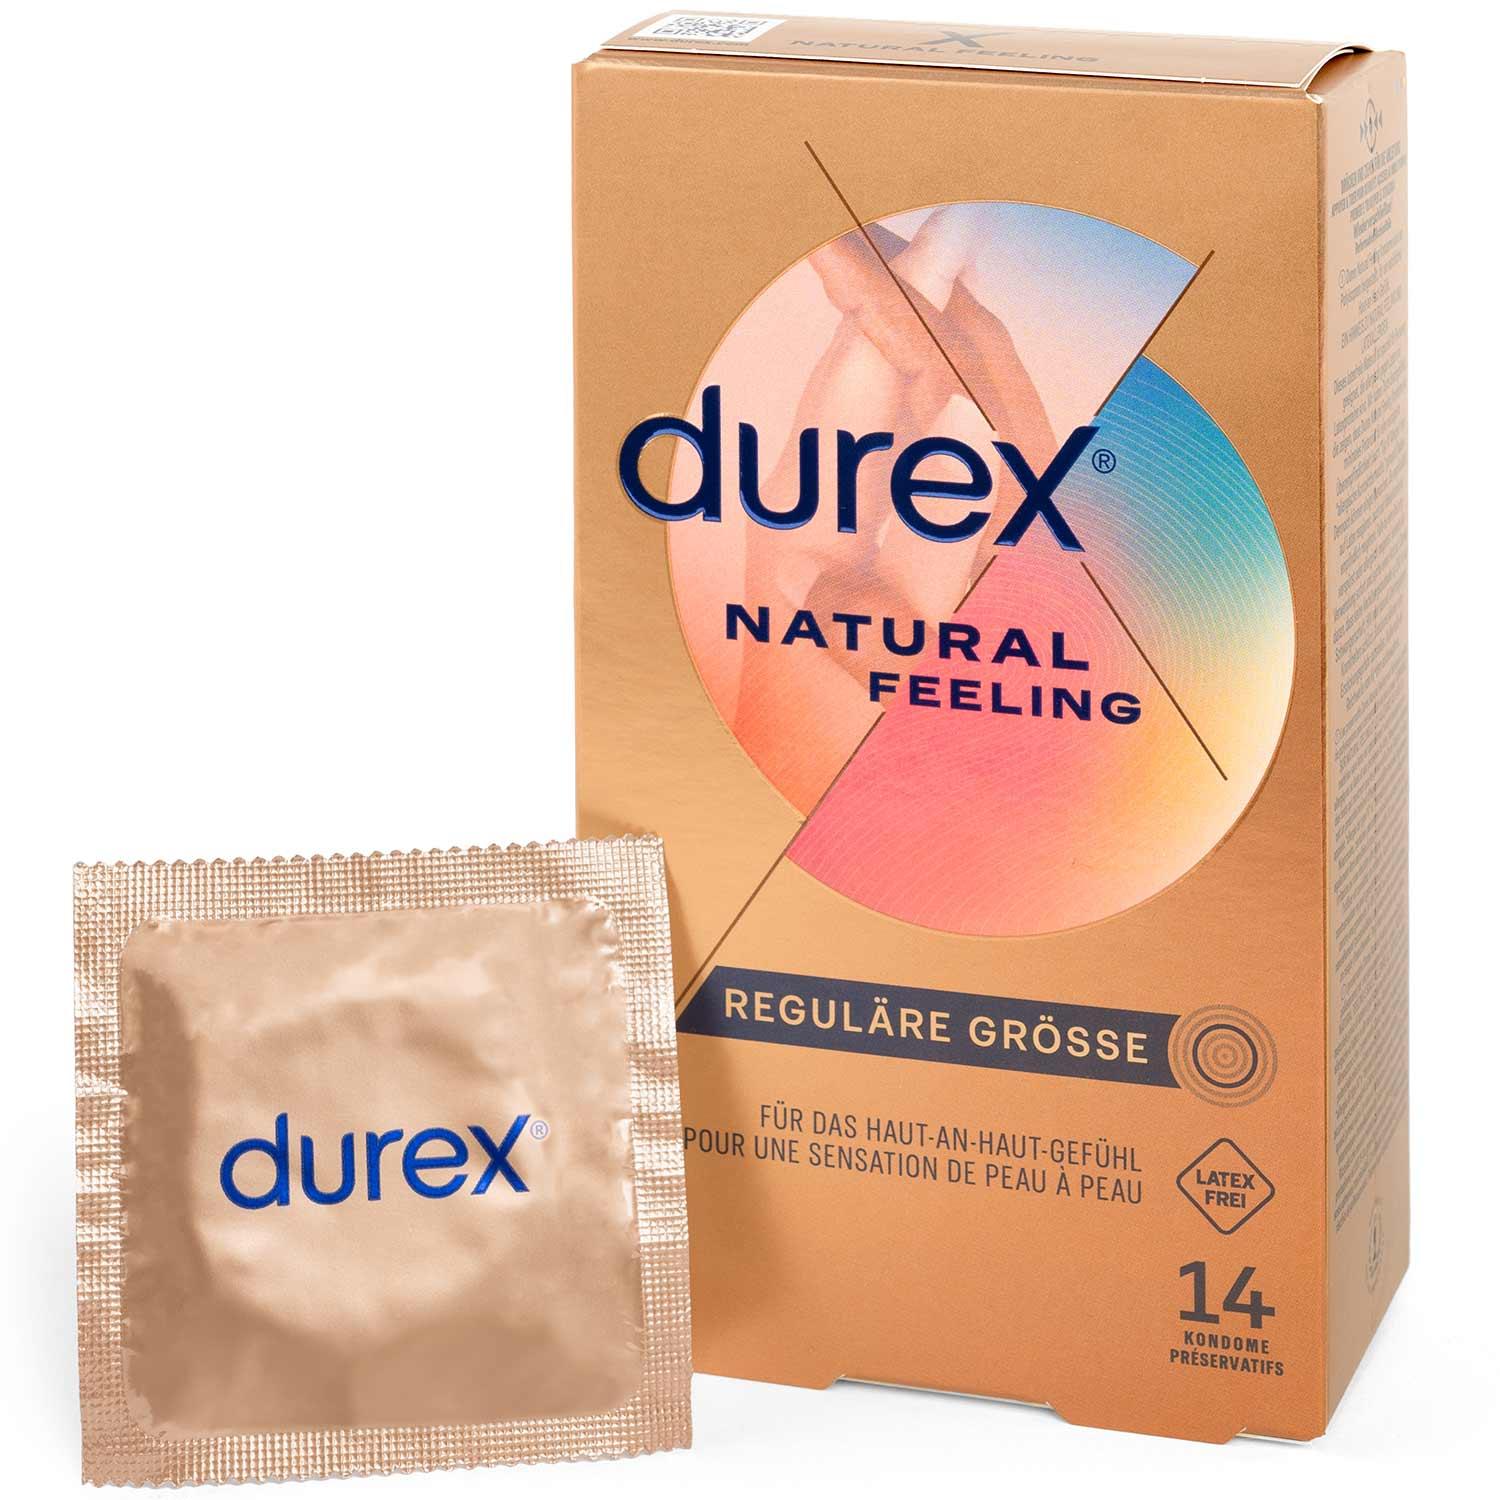 Durex Natural Feeling Condoms 14 pcs, Latex Free, with Reservoir, Ø 56mm, 200mm